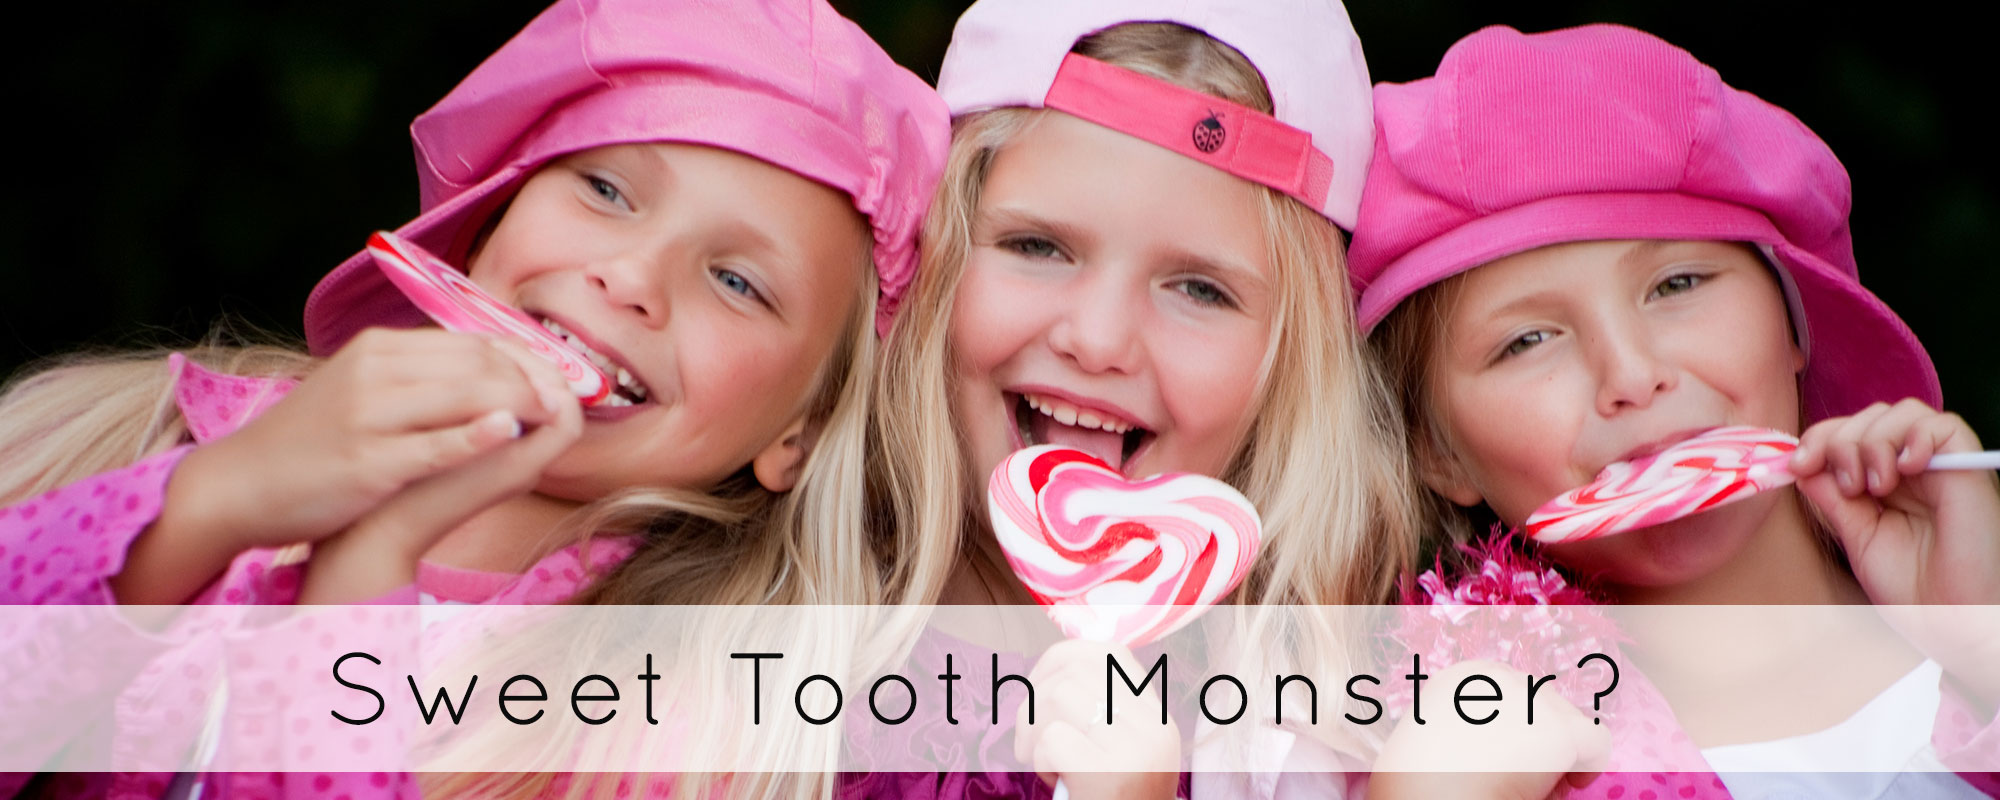 Sweet tooth monsters?